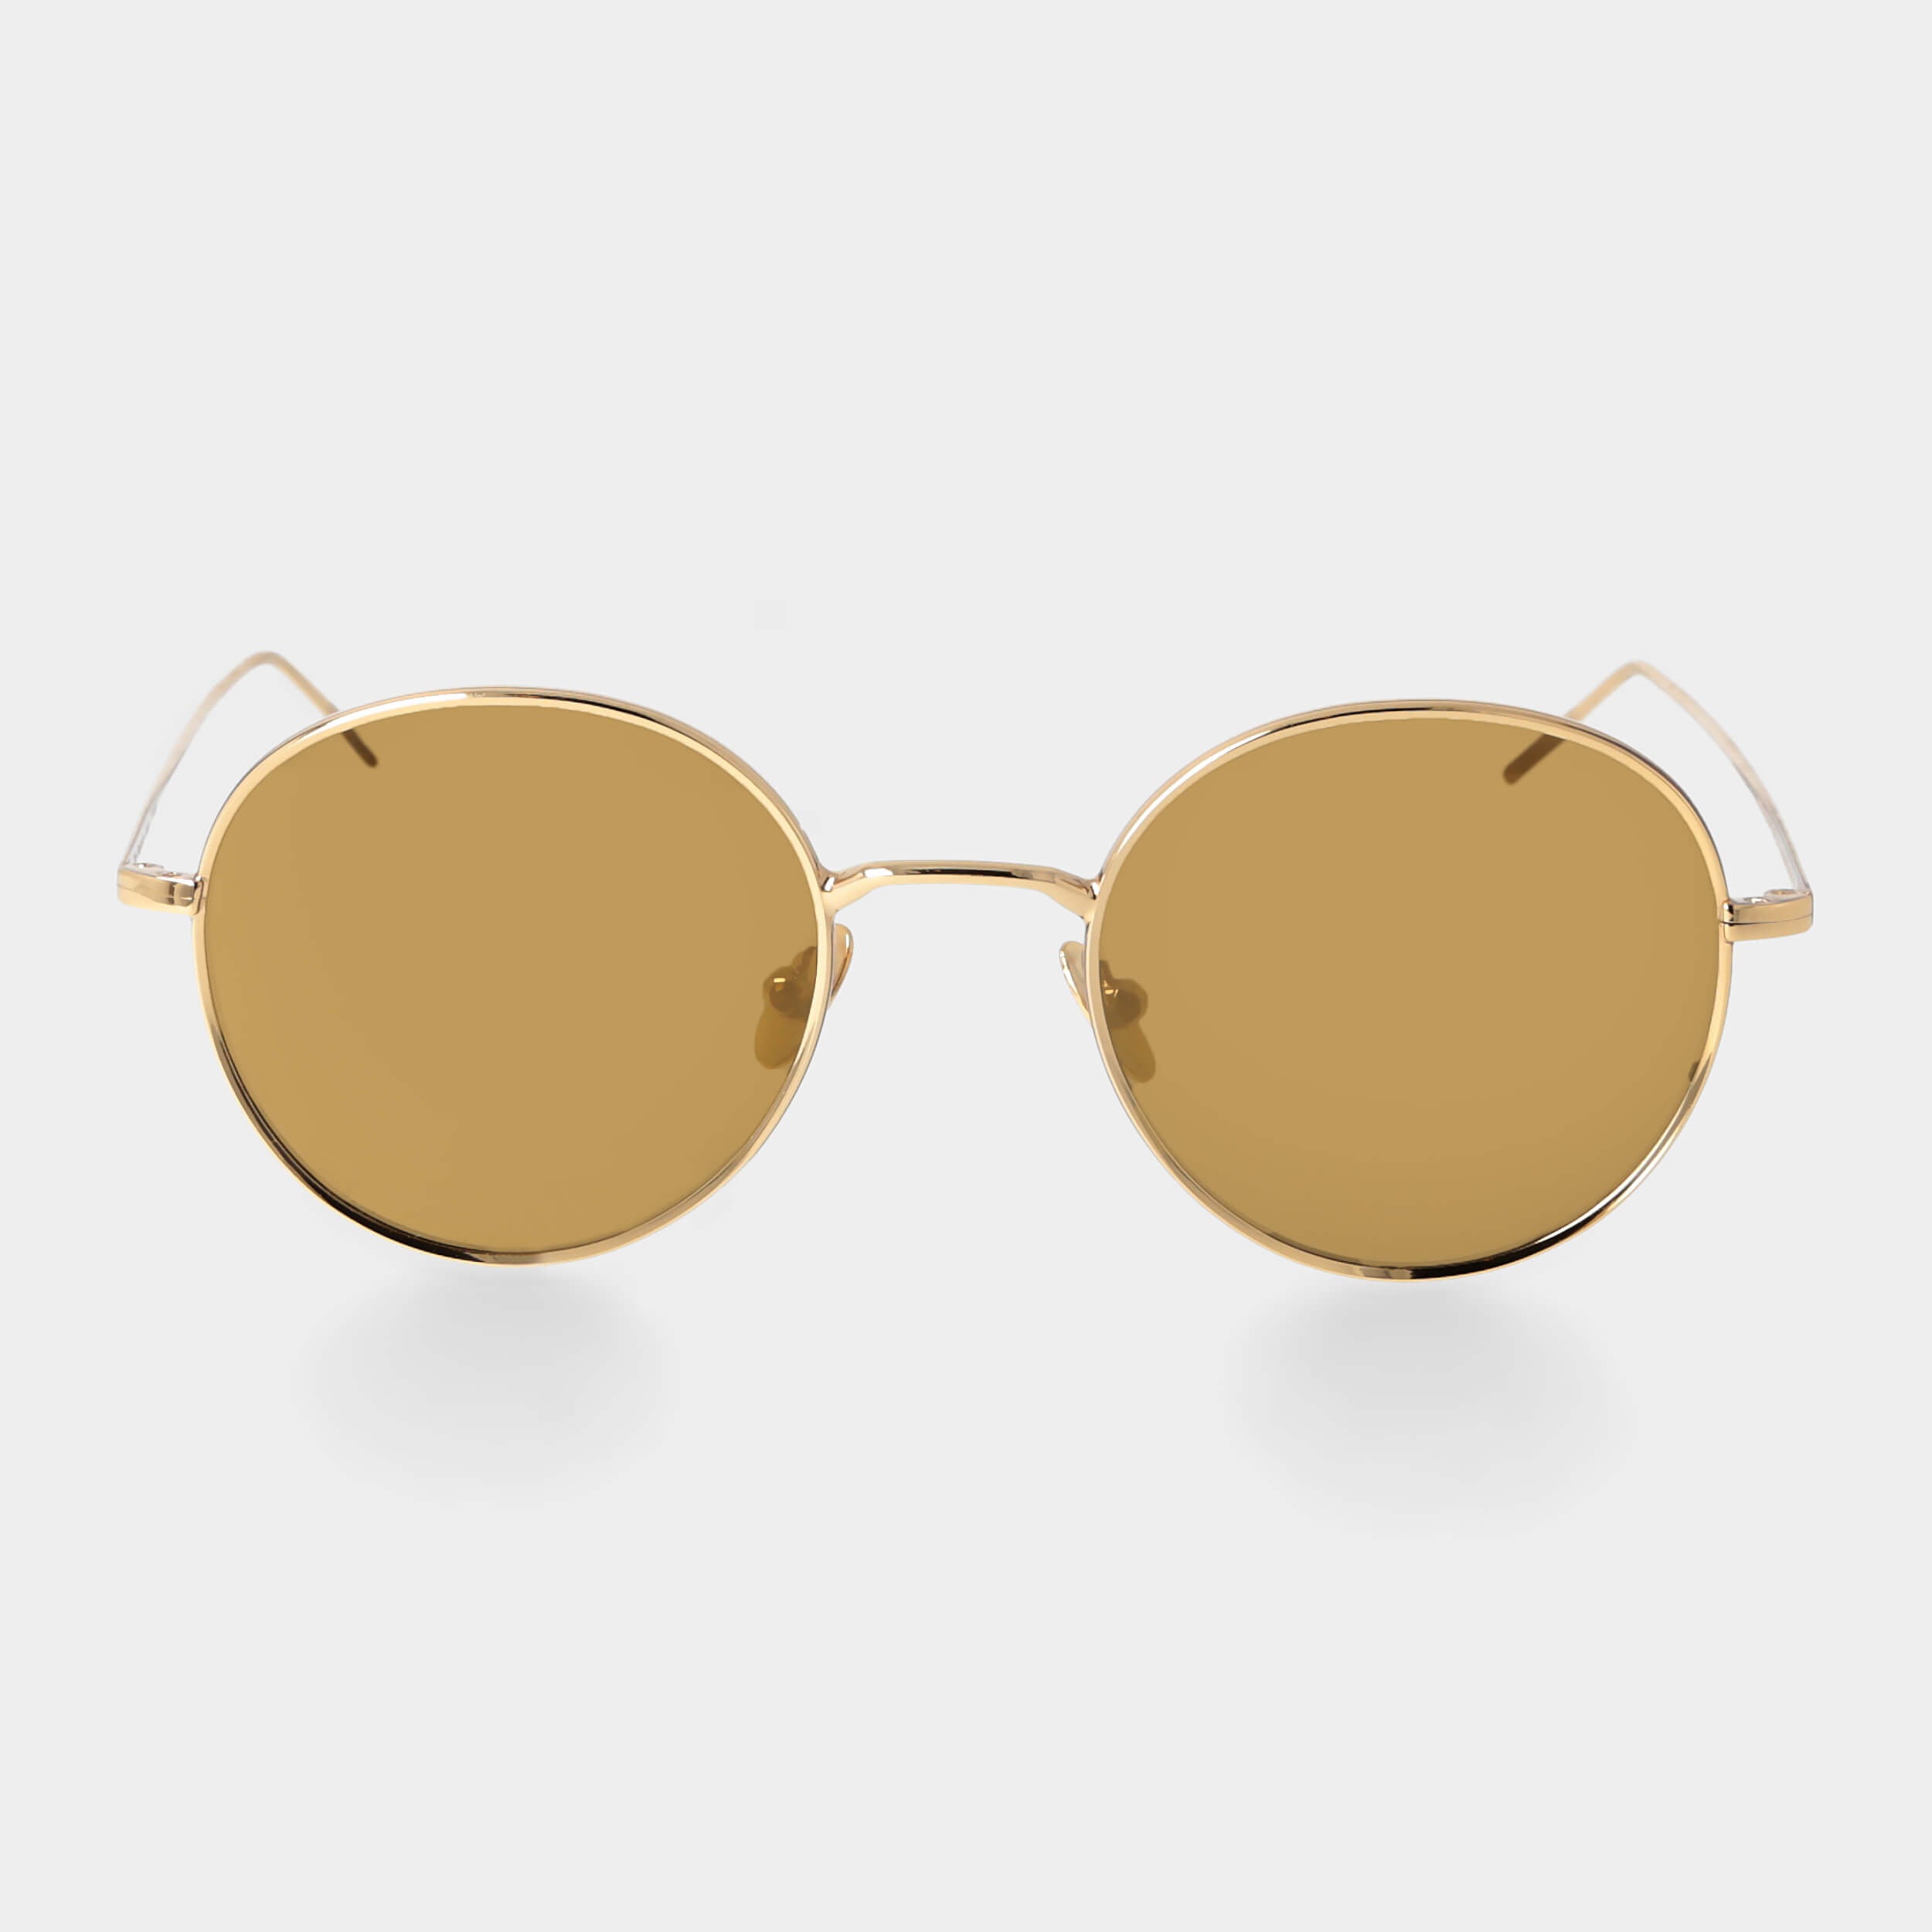 sunglasses-ulster-k-gold-tobacco-tbd-eyewear-front